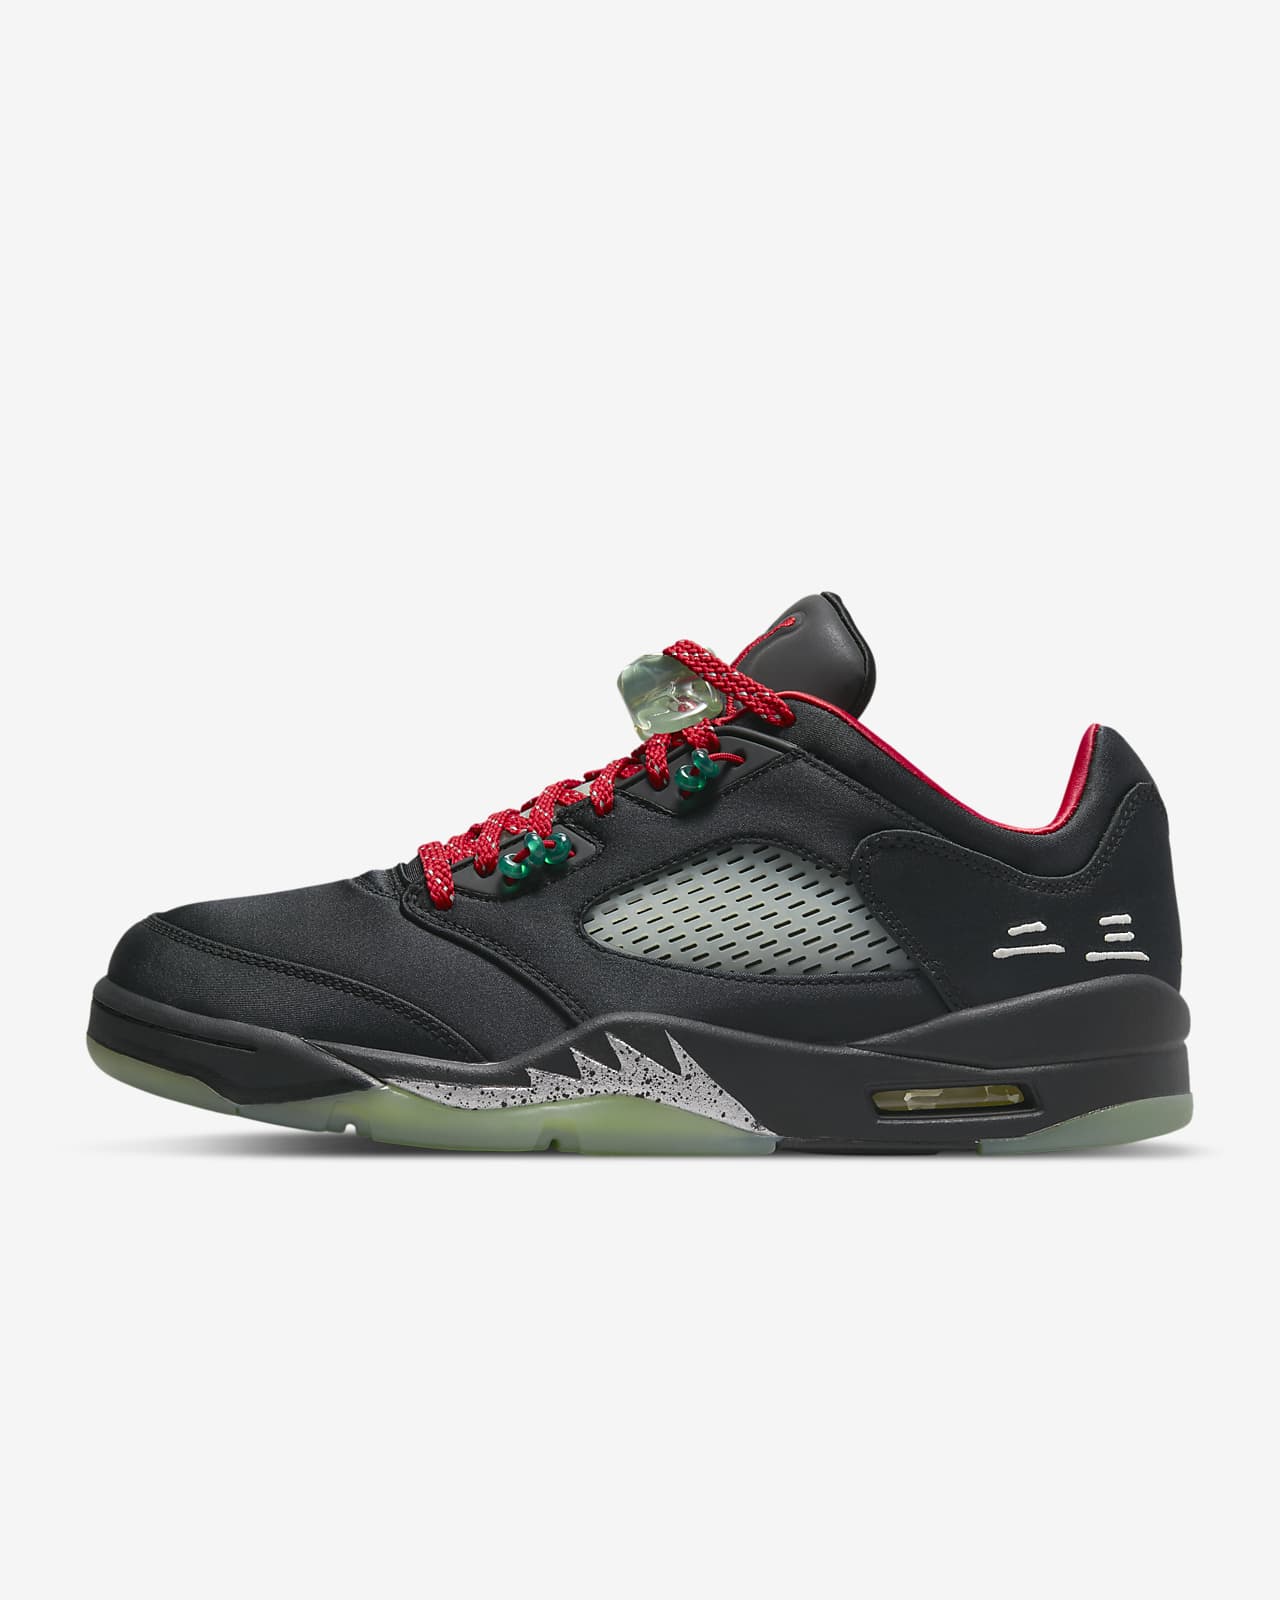 Distributie maag nationale vlag Air Jordan 5 Retro Low SP Shoes. Nike JP